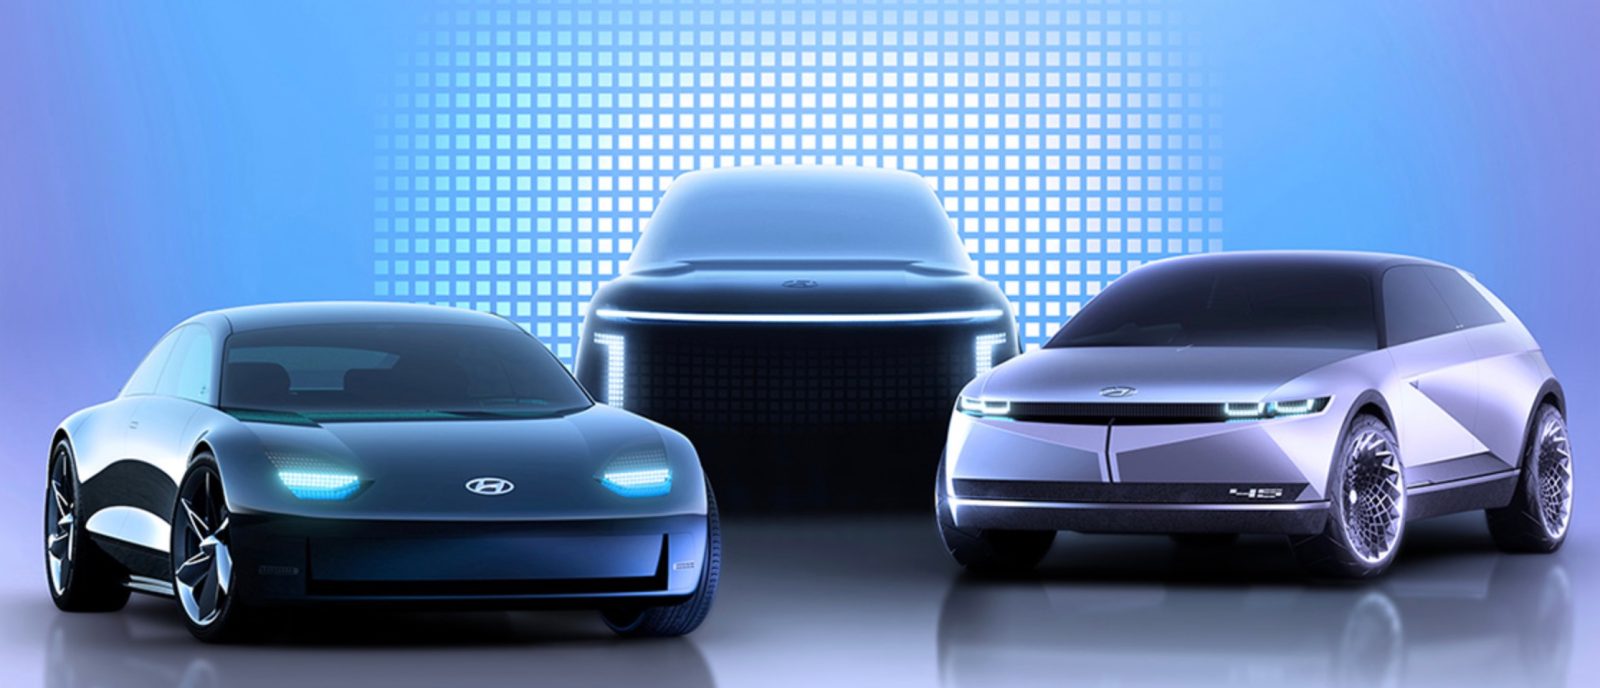 Hyundai launches IONIQ as new EV brand, confirms 3 new electric cars